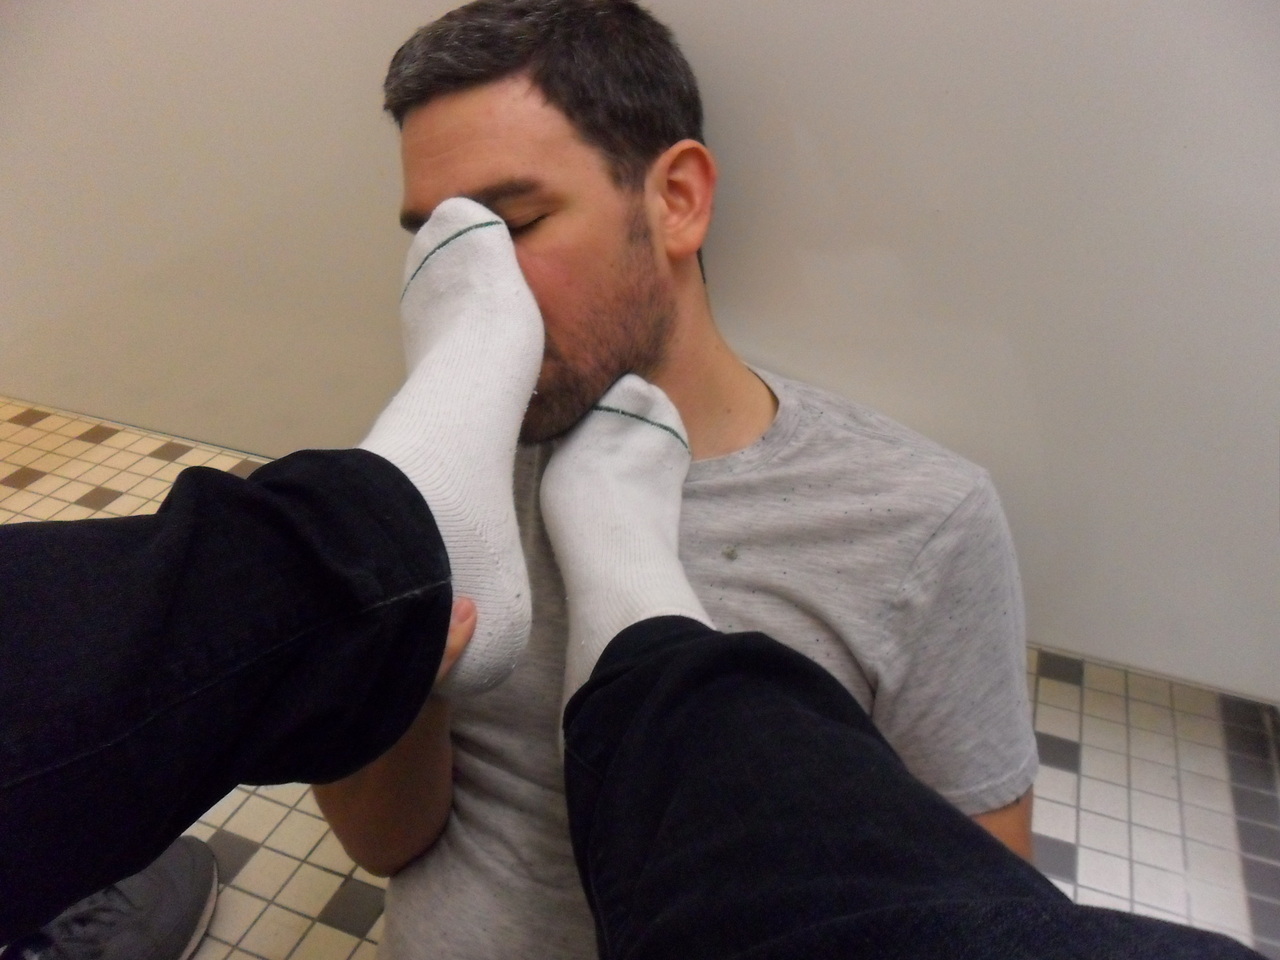 Male dress sock fetish